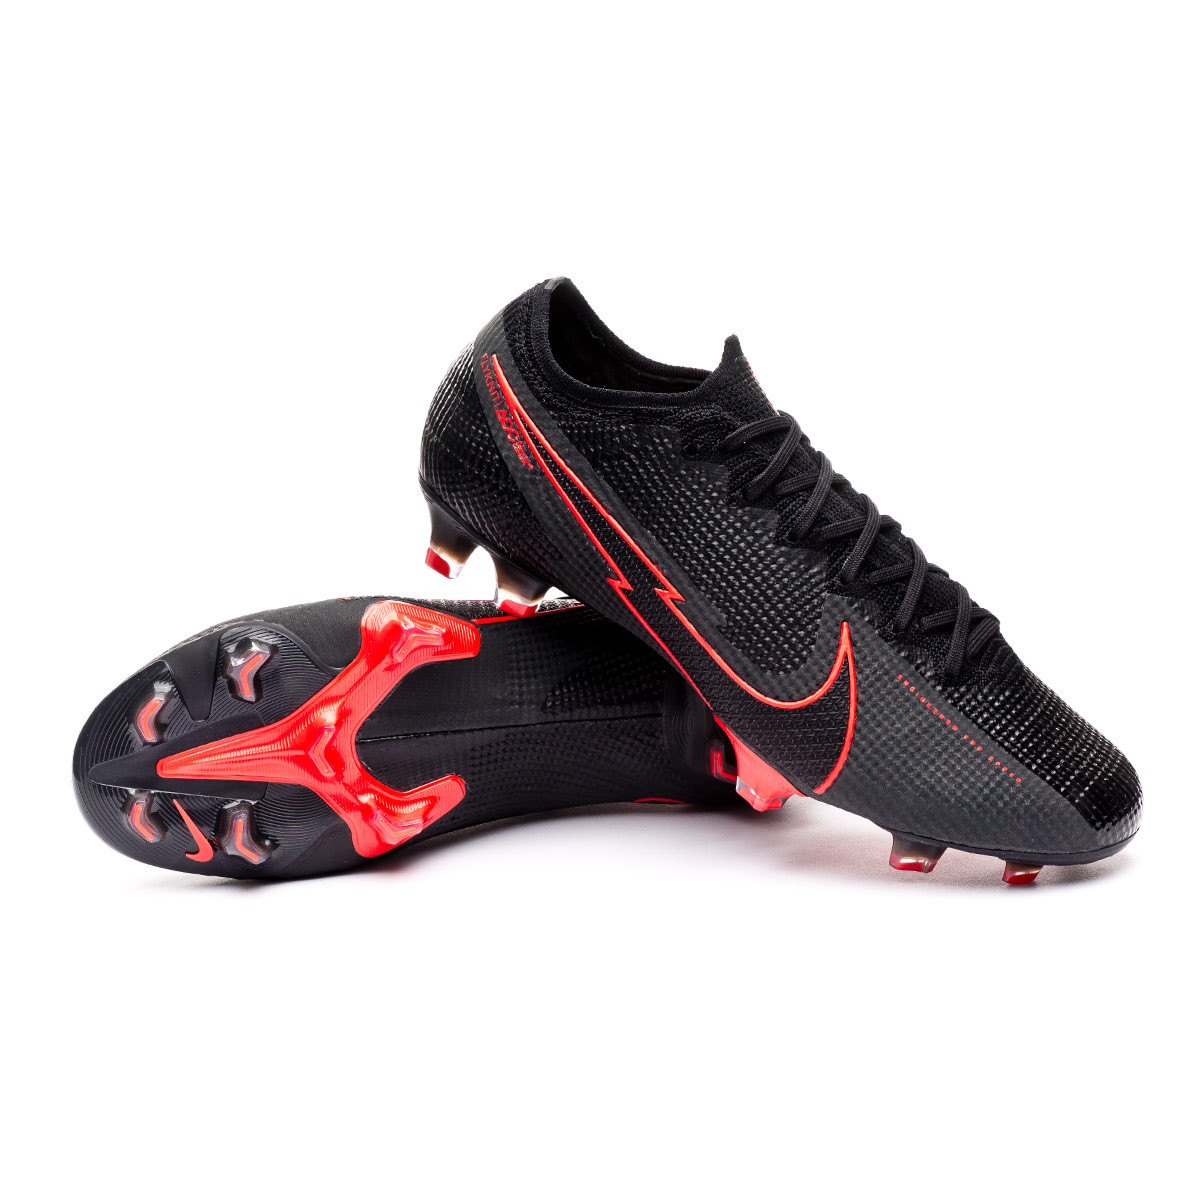 Bota de fútbol Nike Mercurial Vapor XIII Elite FG Black-Black-Dark smoke  grey-Chile red - Tienda de fútbol Fútbol Emotion